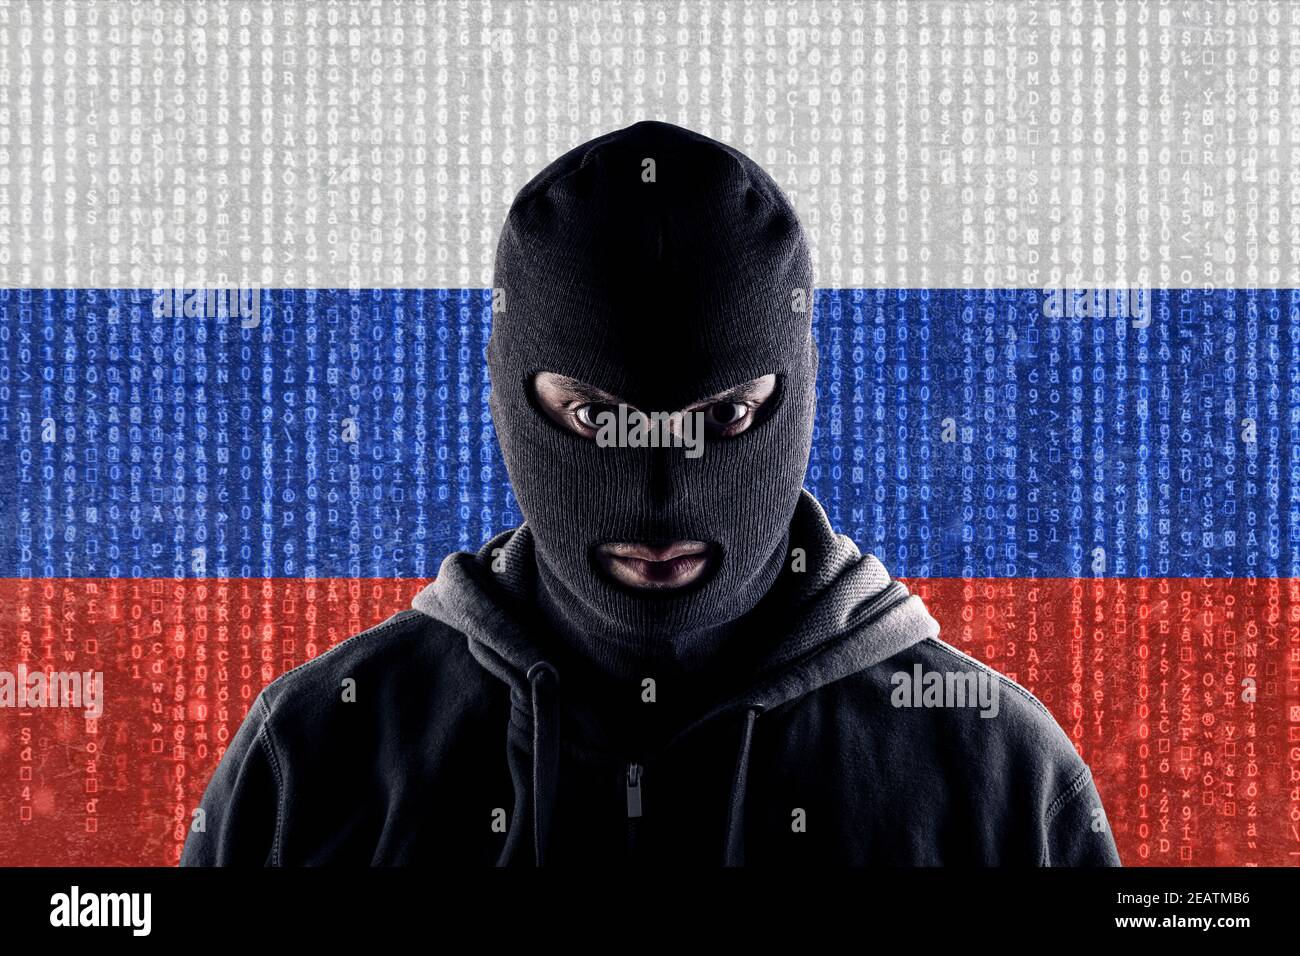 Russian masked computer hacker with black balaclava Stock Photo